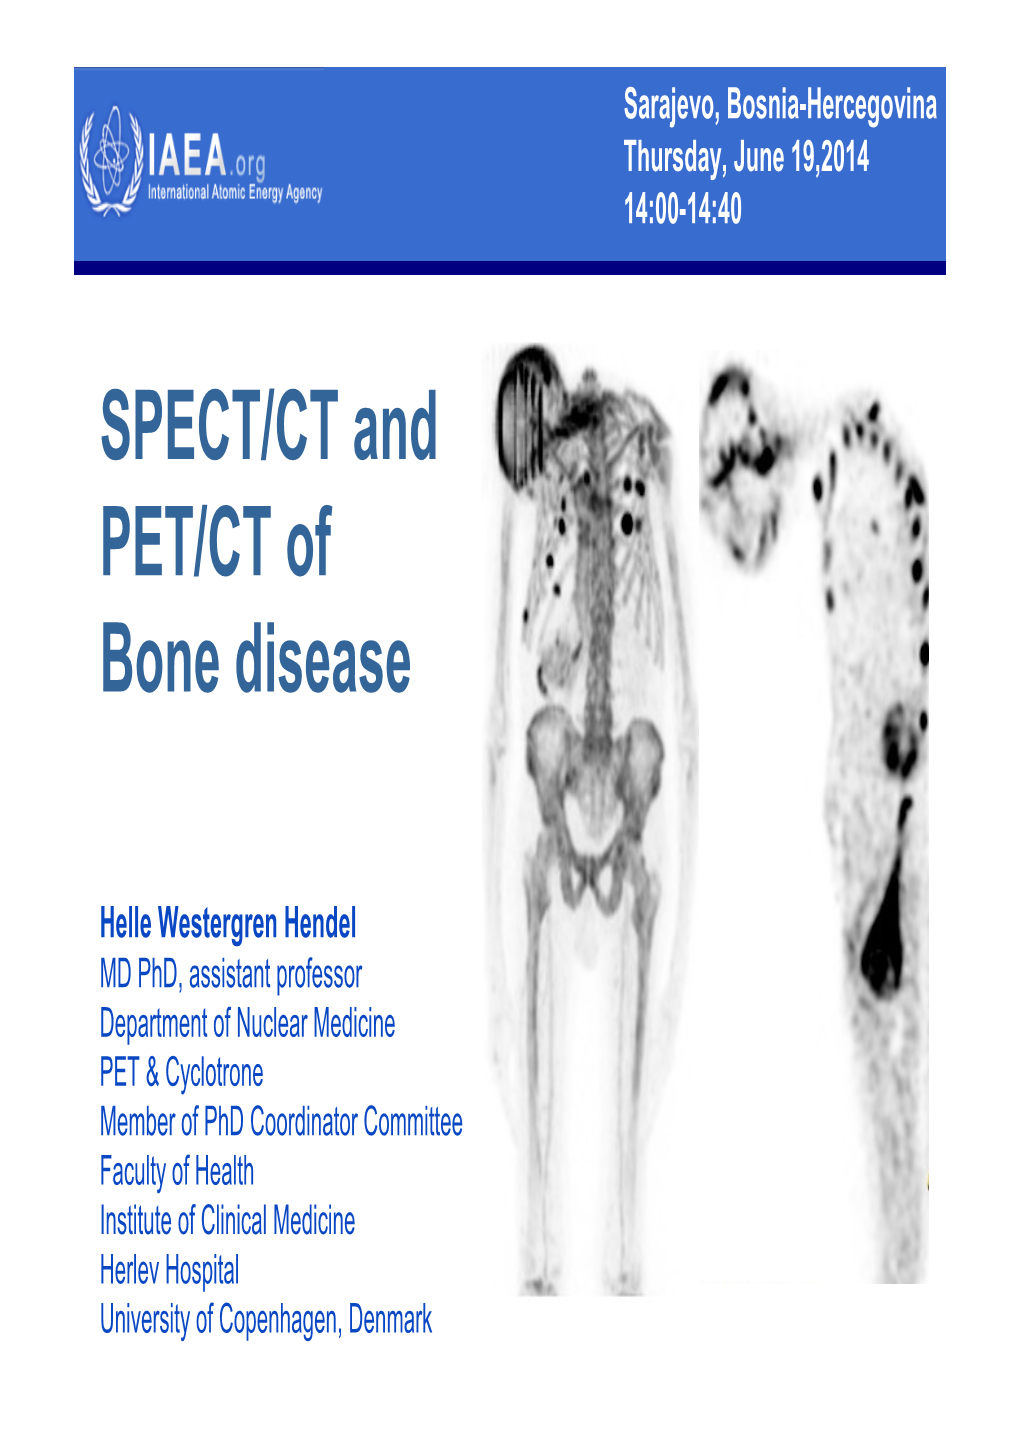 SPECT/CT and PET/CT of Bone Disease